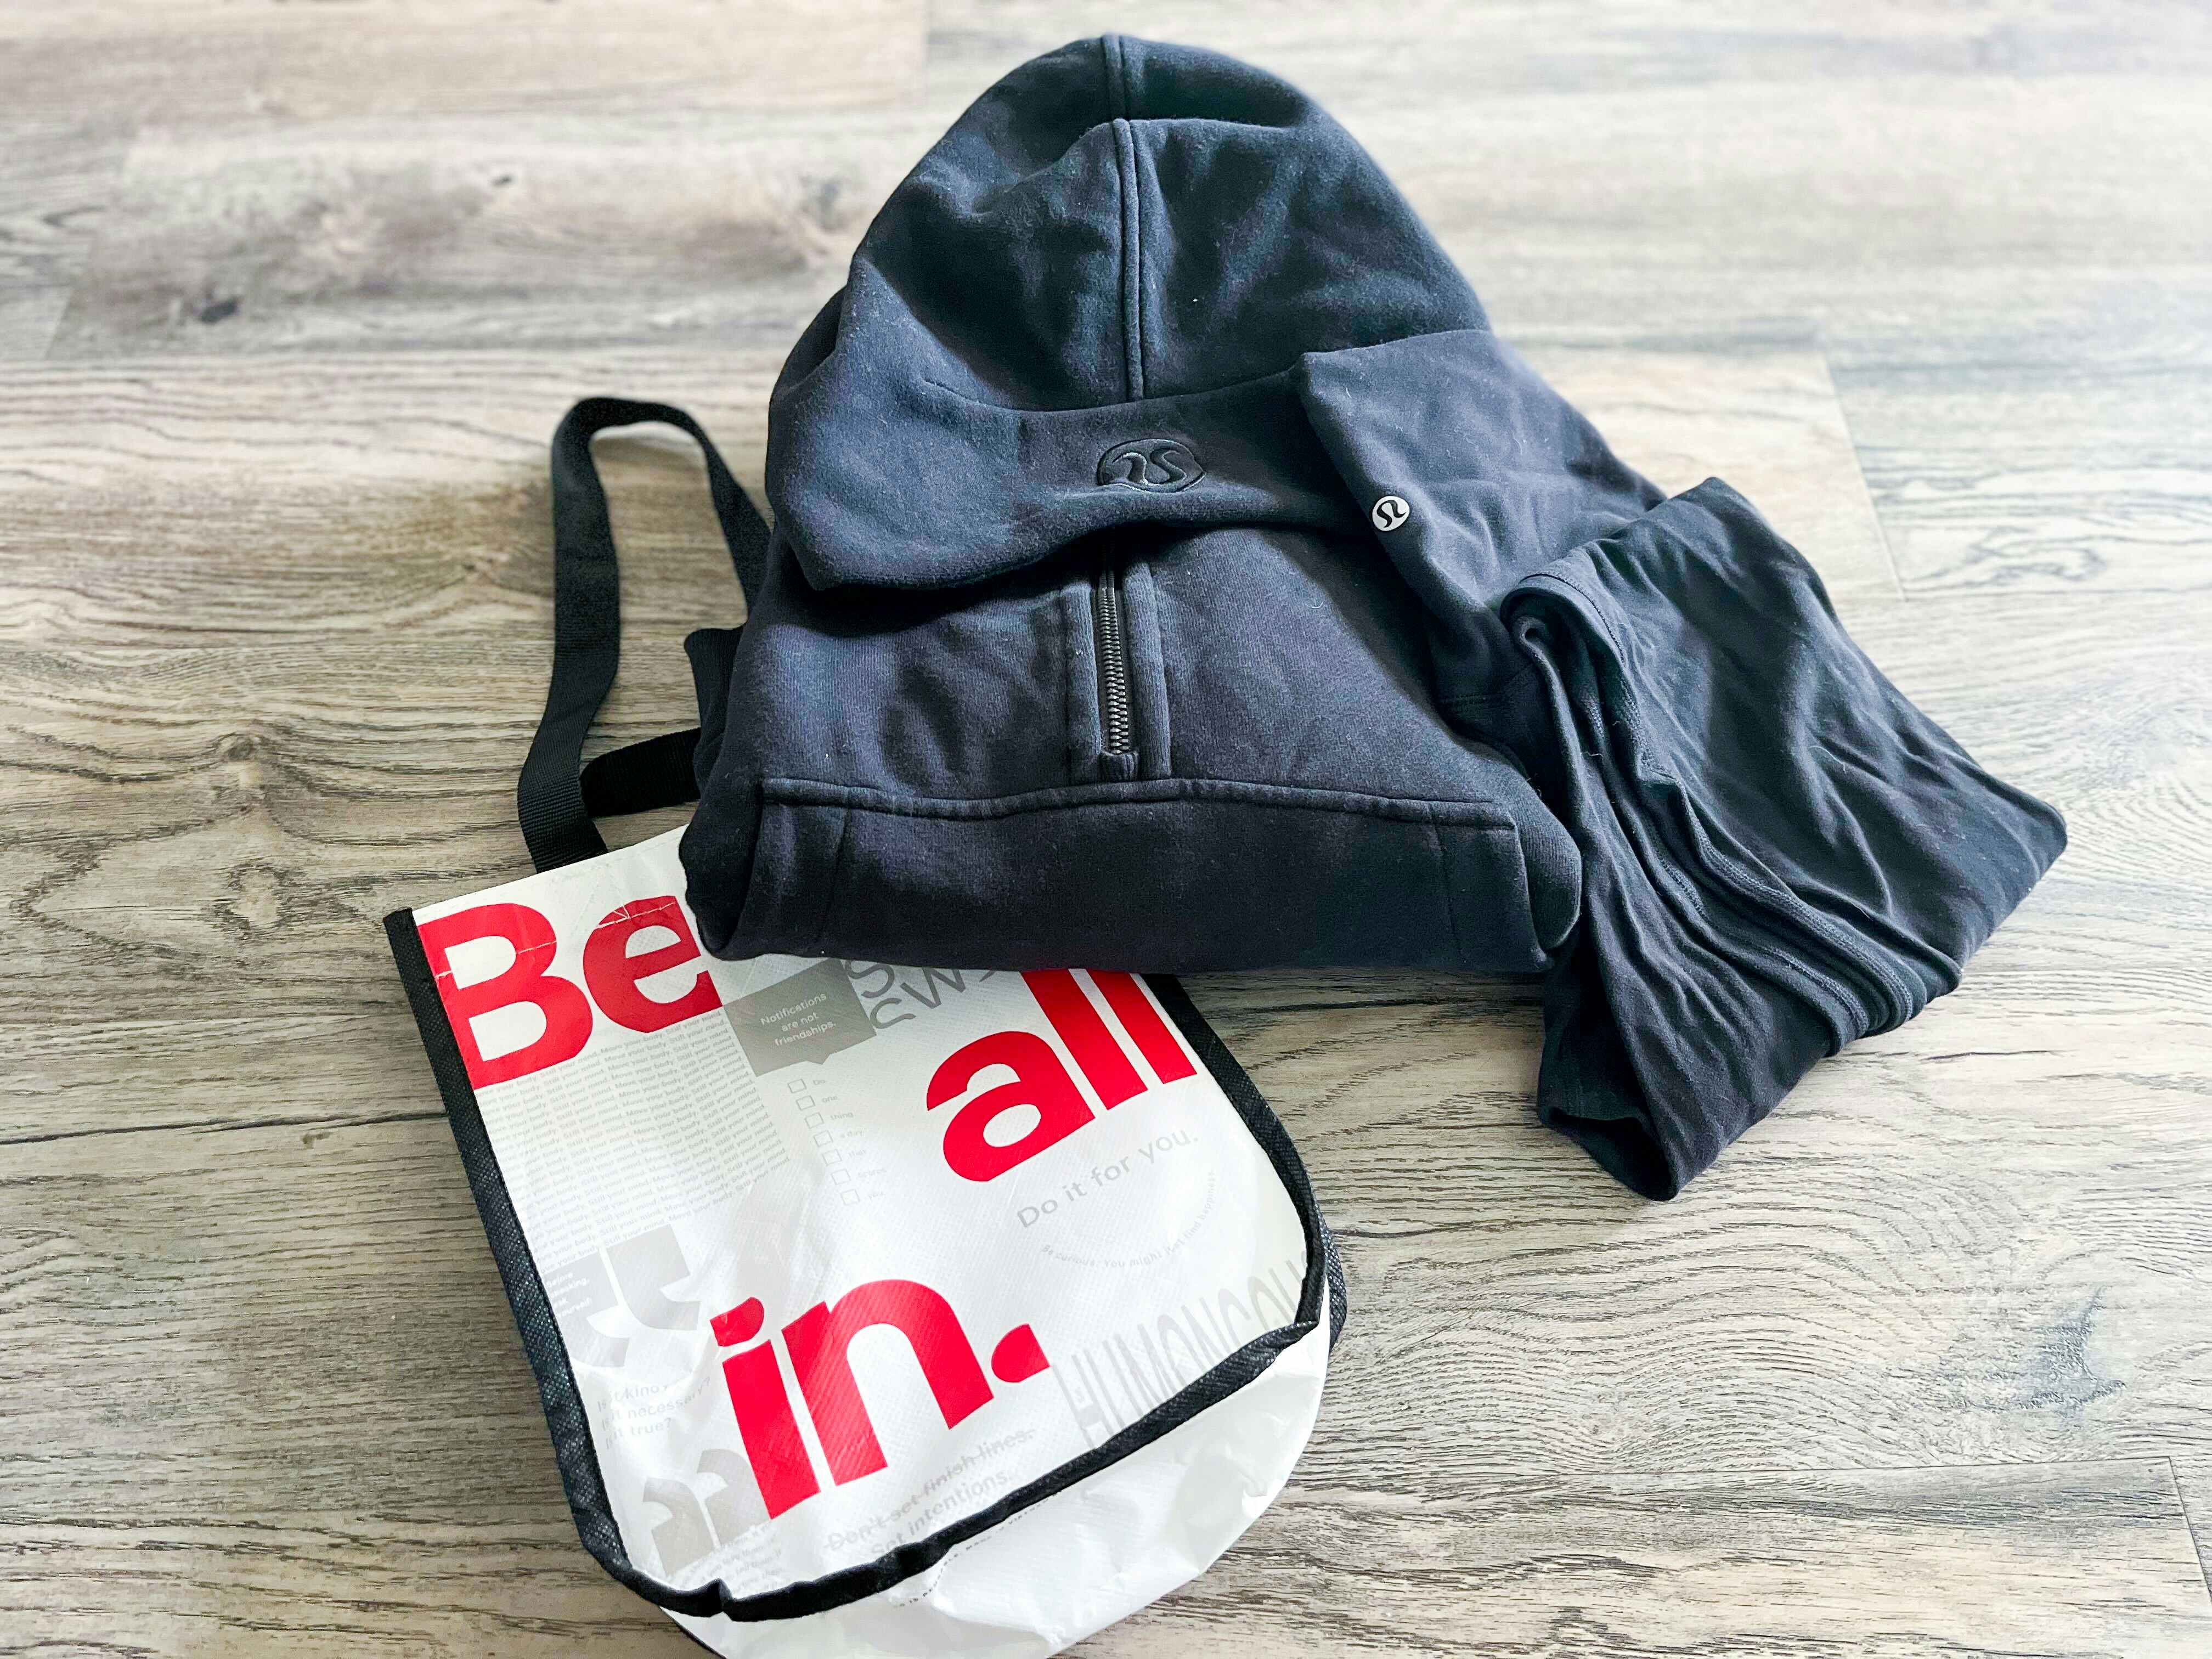 A Lululemon bag and hoodie